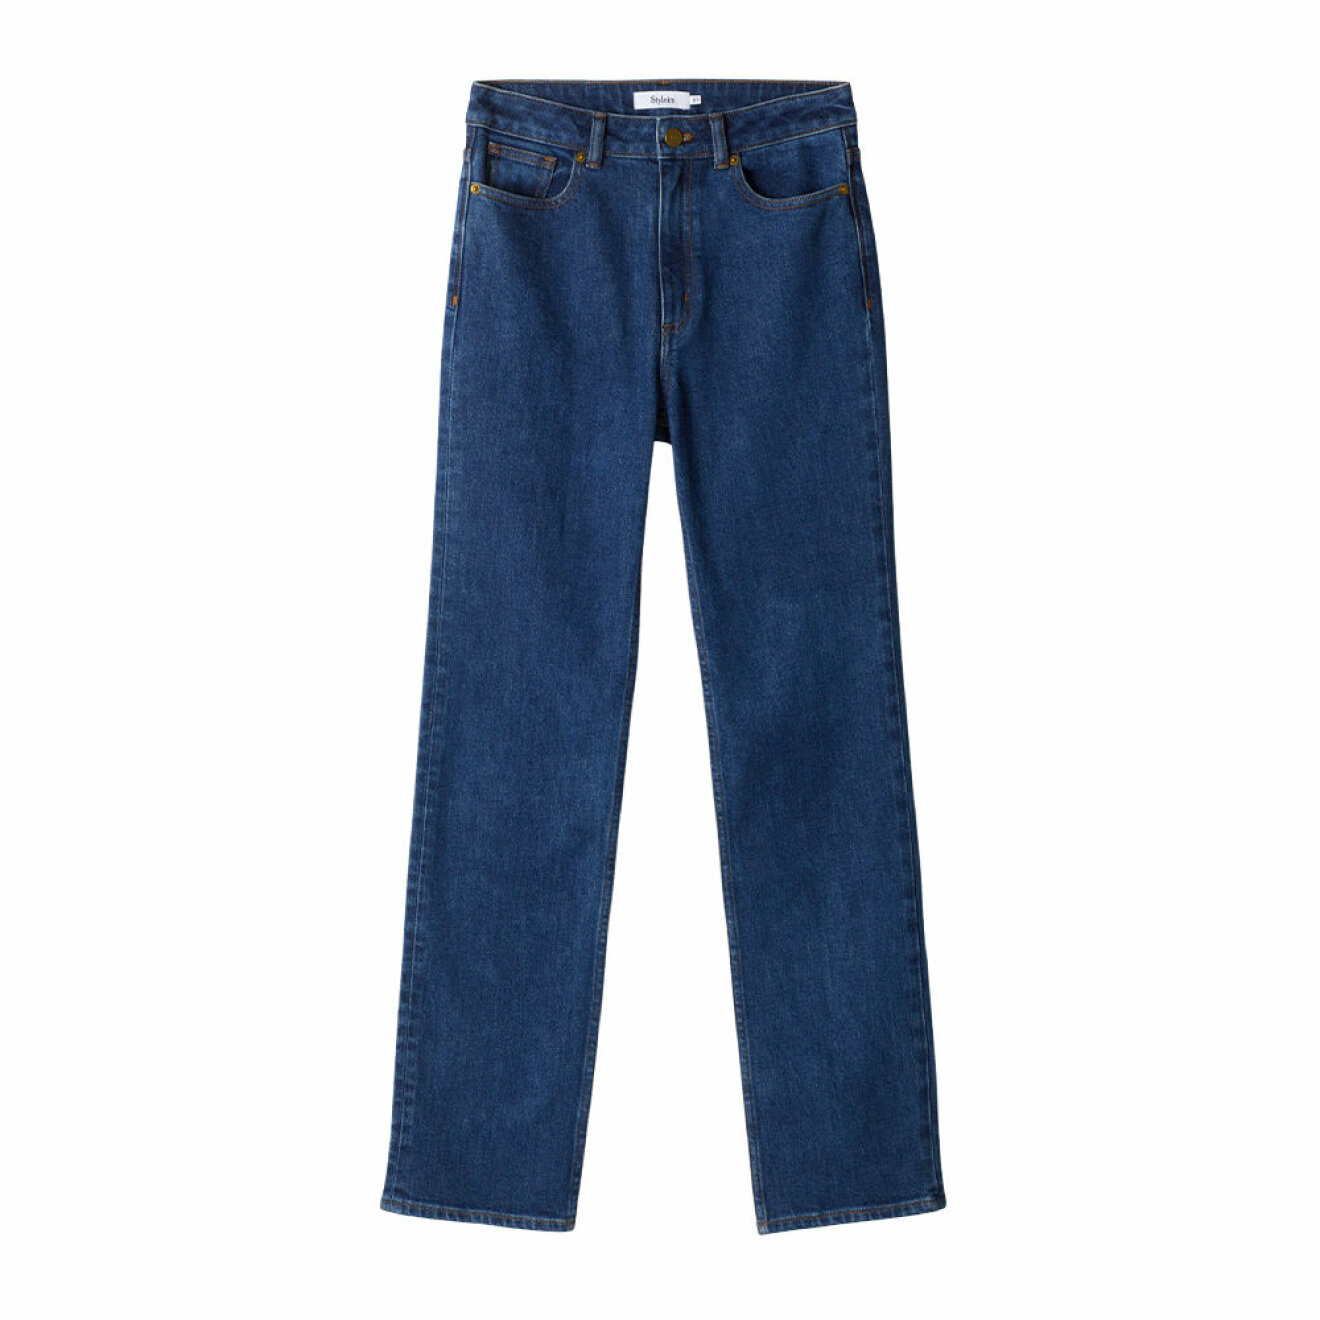 Jeans, 2 199  kr, Stylein.